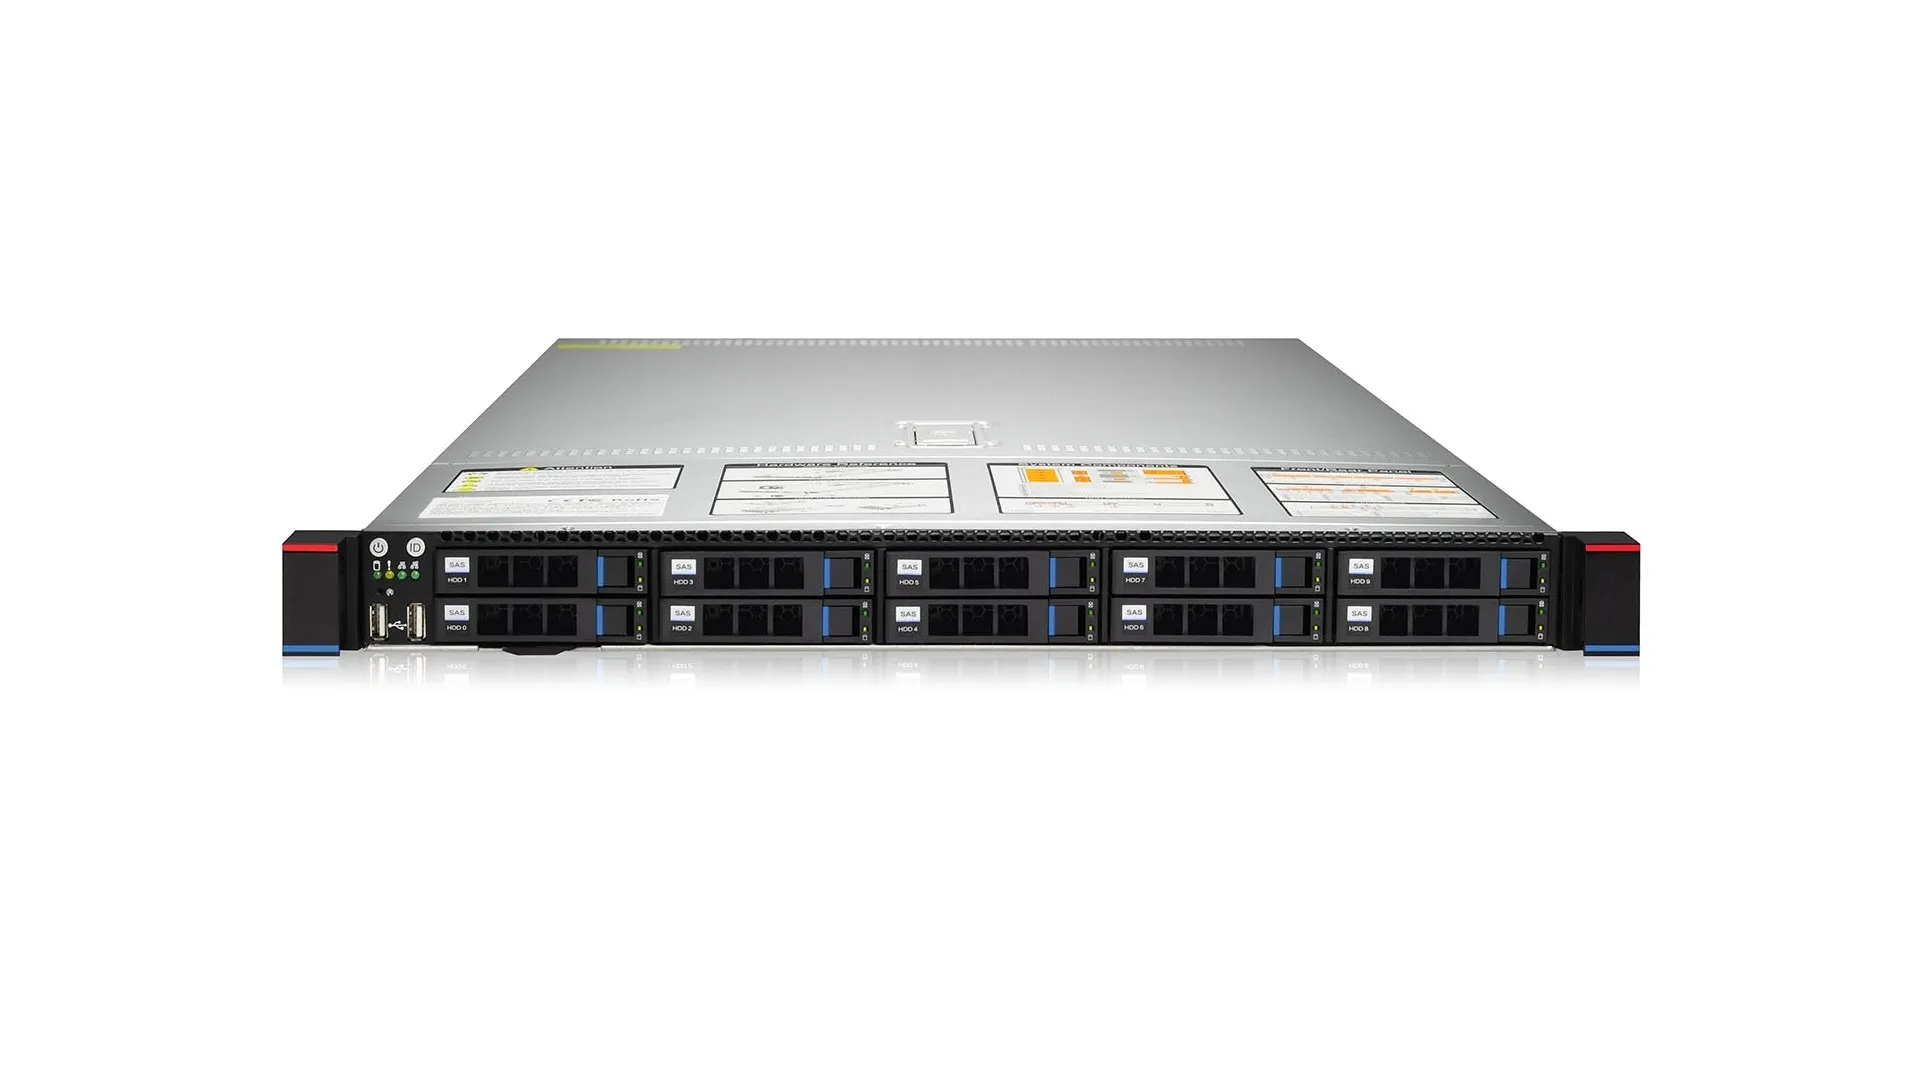 Сервер QSRV-161002